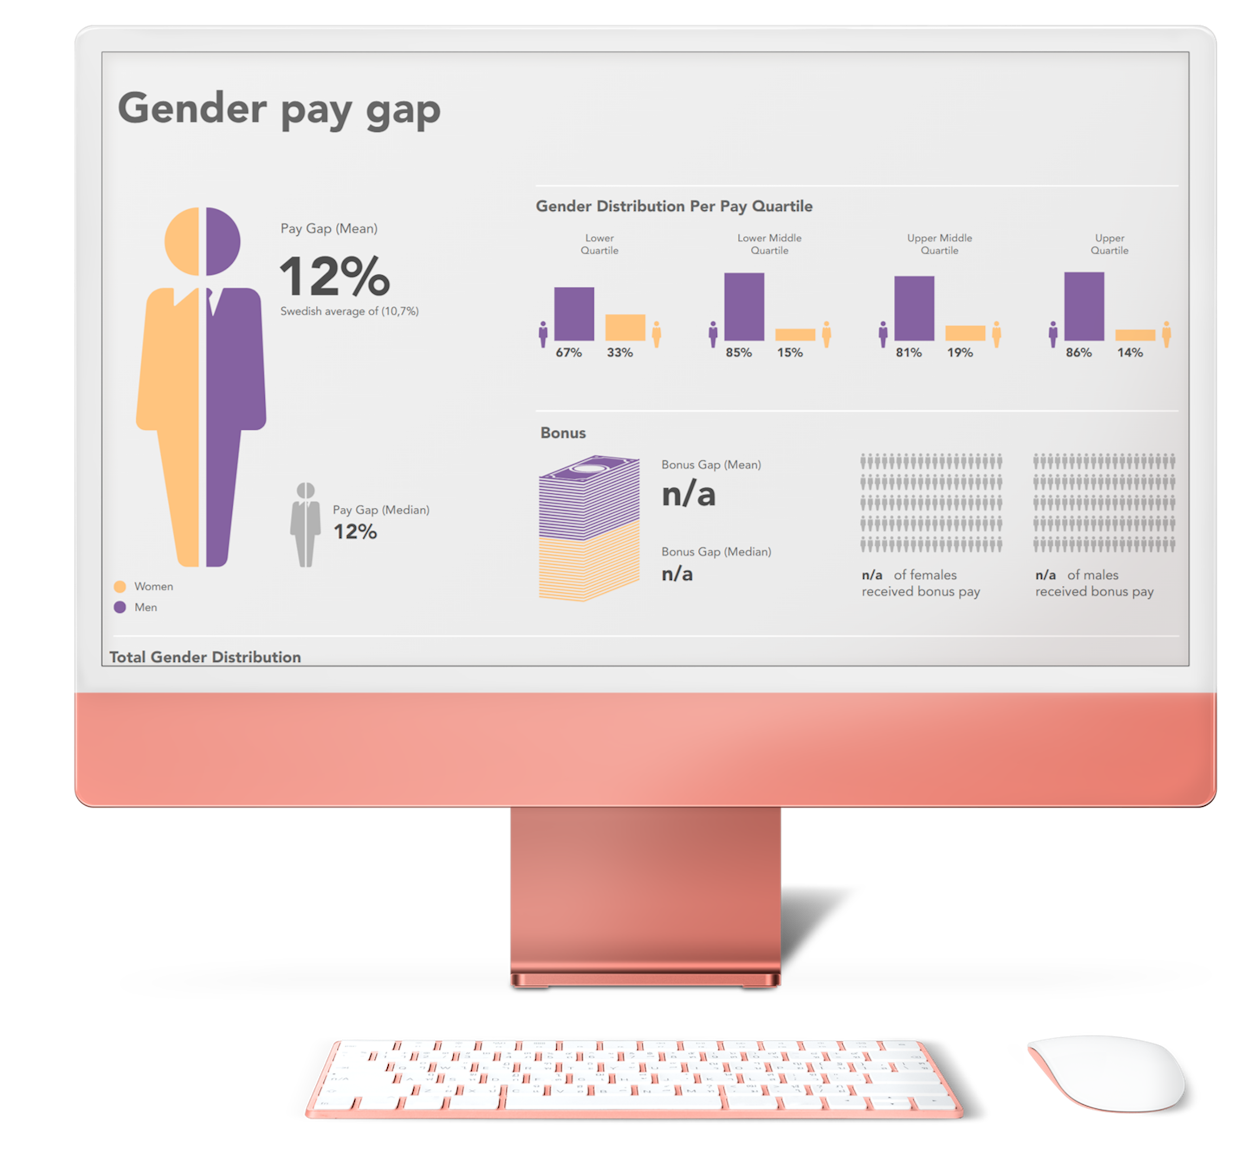 gender distribution per pay quartile